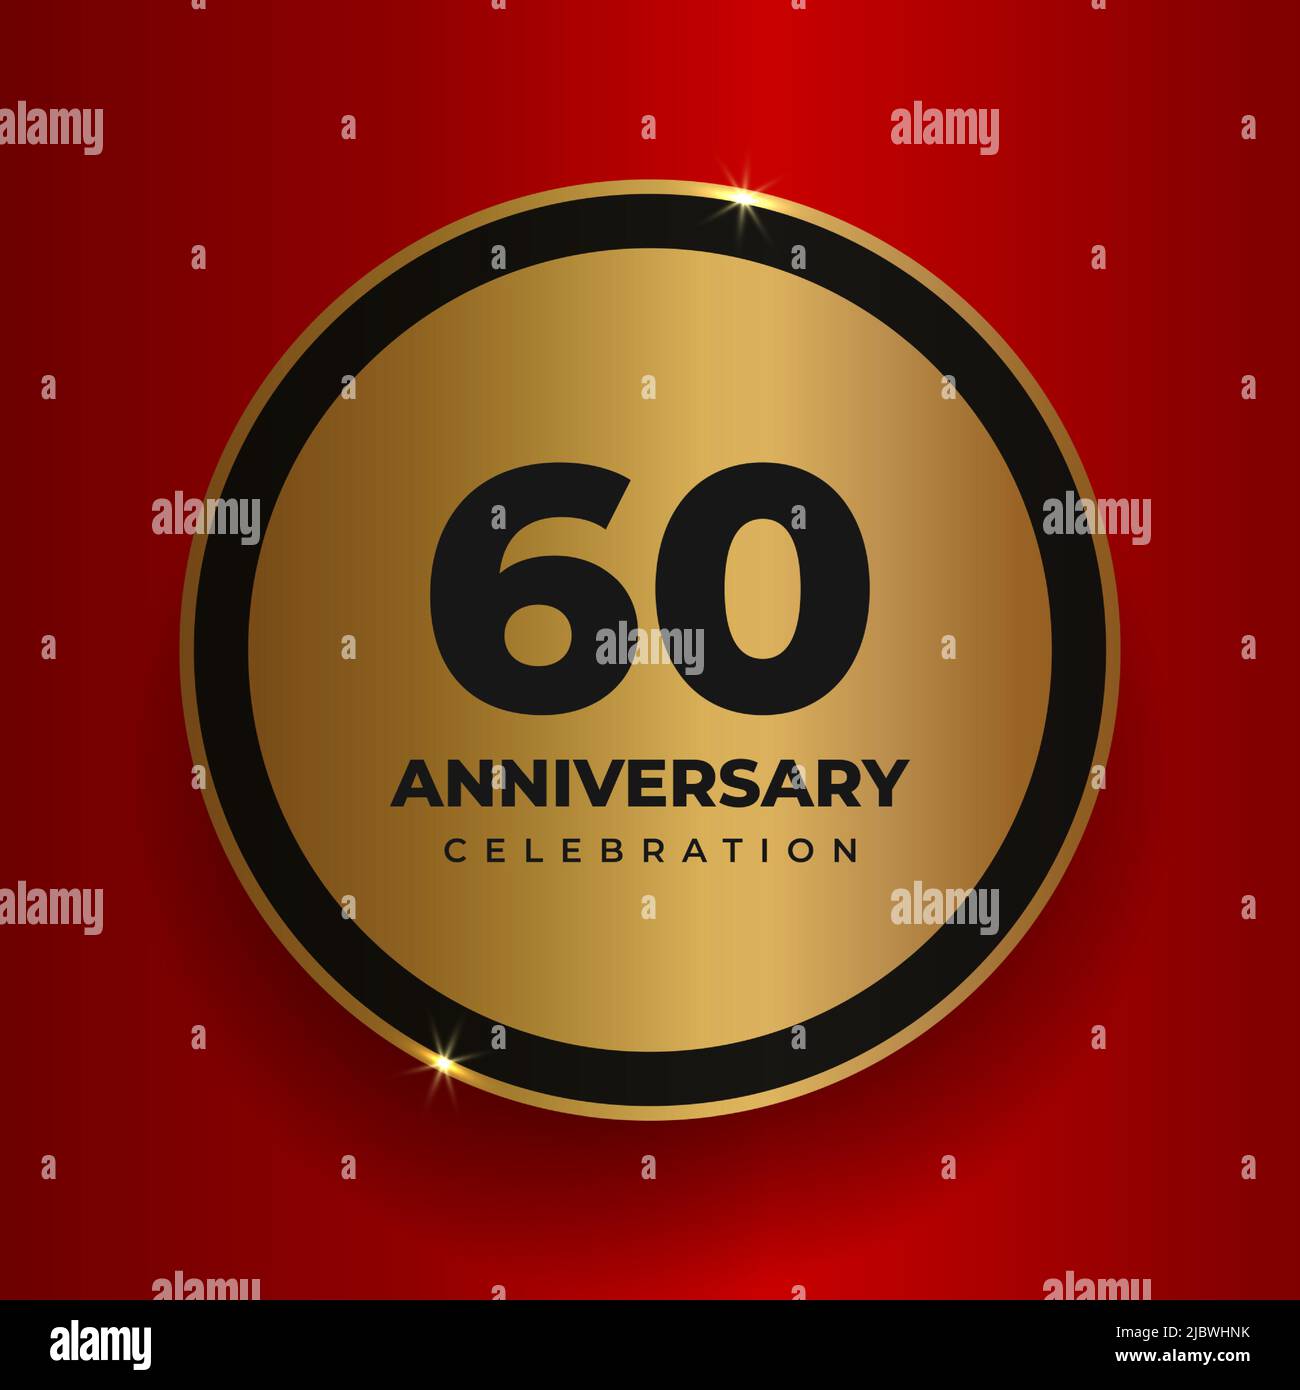 60 years anniversary celebration background. Celebrating 60th